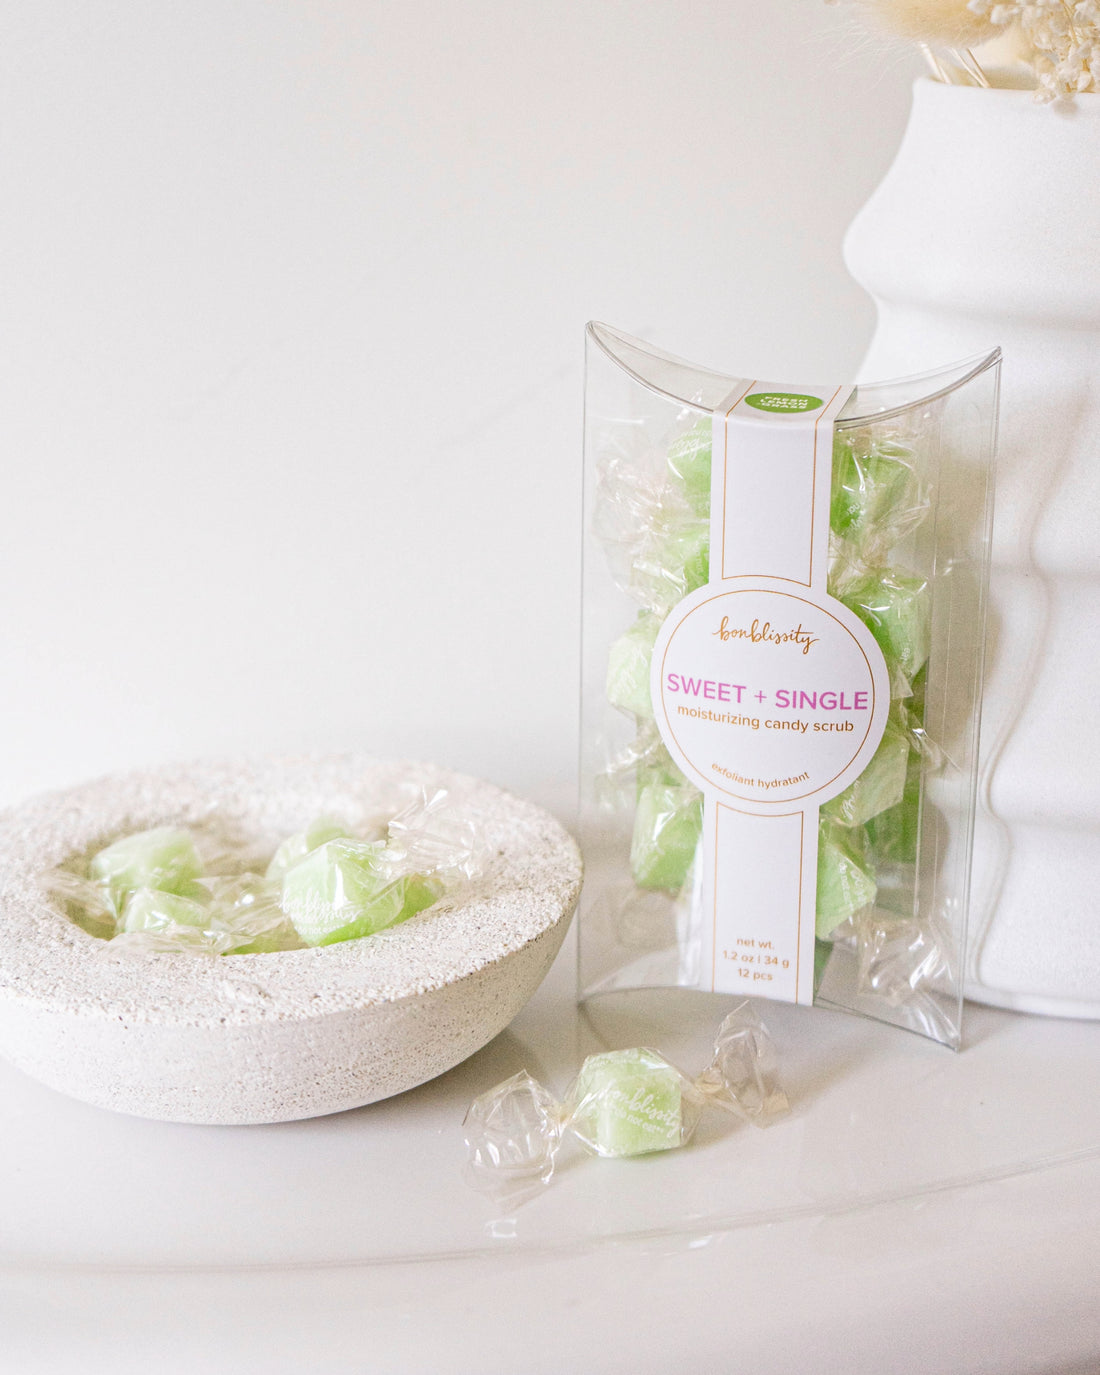 Mini-Me Pack: Sugar Cube Candy Scrub - Fresh Lemongrass